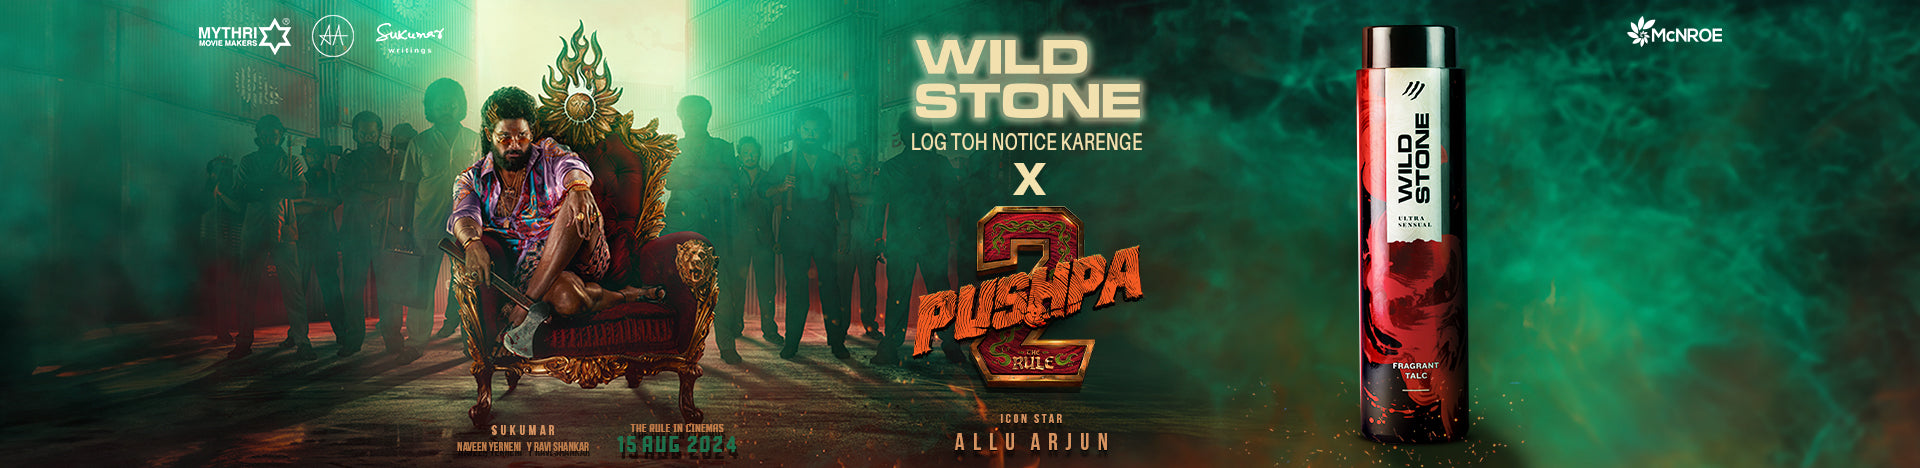 Wild Stone X Pushpa